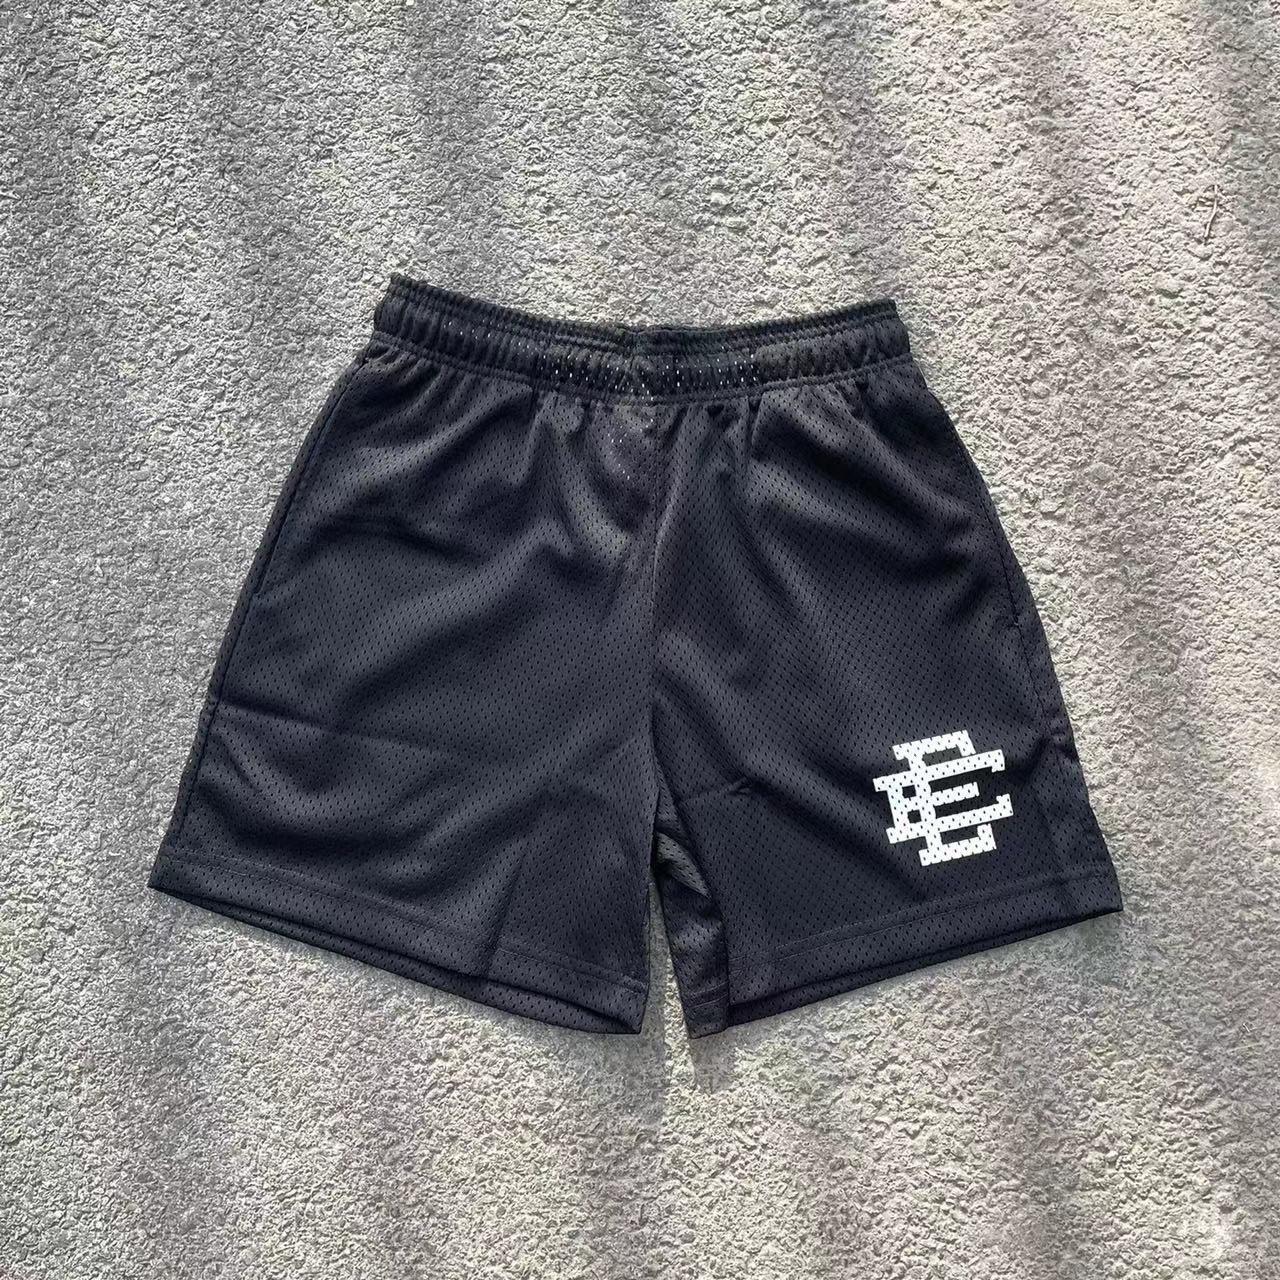 US$ 49.00 - 1:1 quality version Eric Emanuel white logo mesh shorts ...